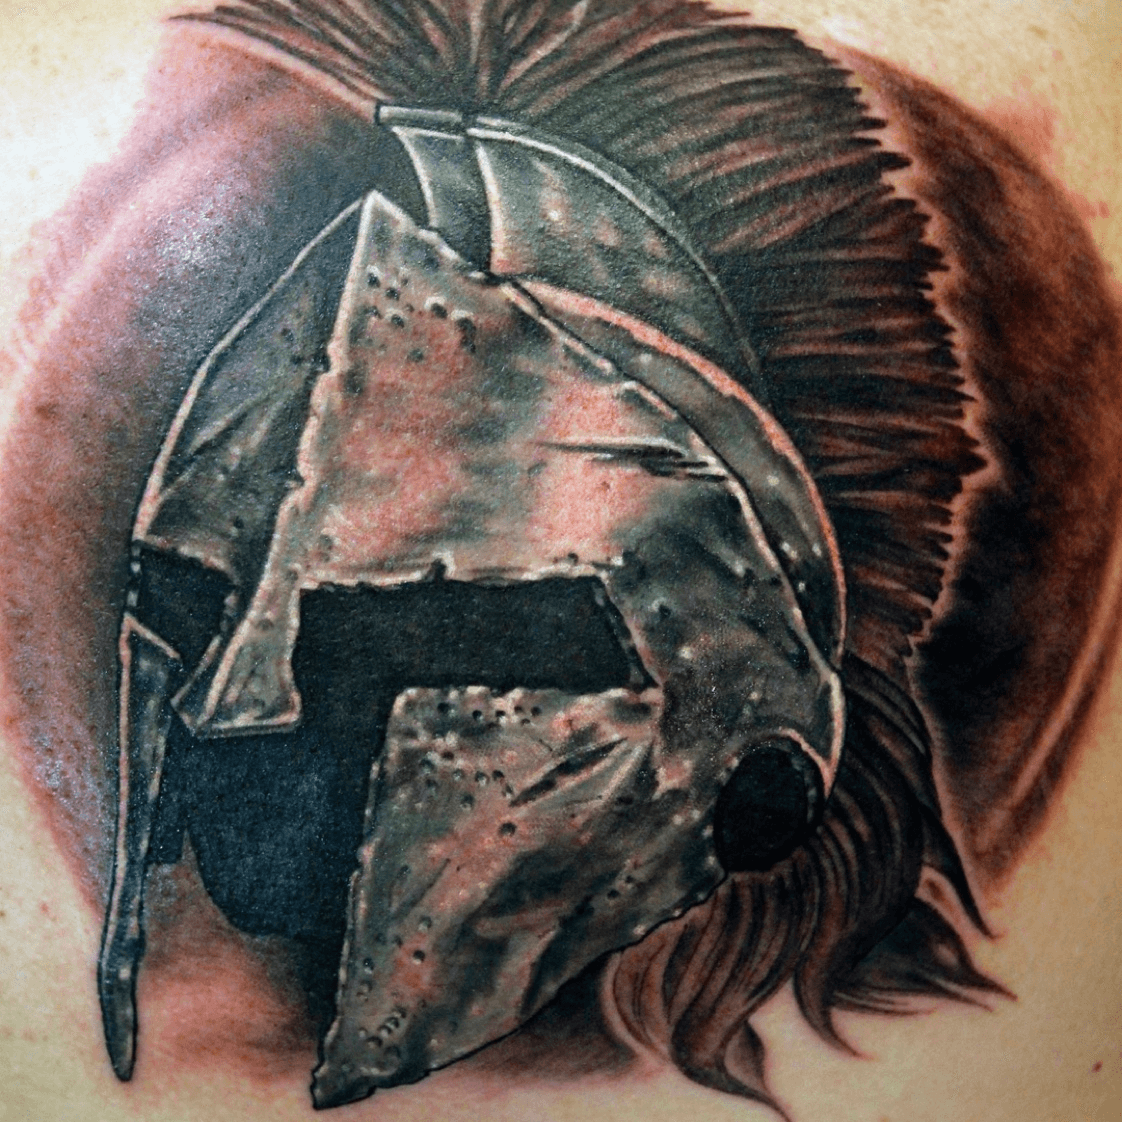 Bronze Age Tattoos: History, Tools & Symbols | Study.com